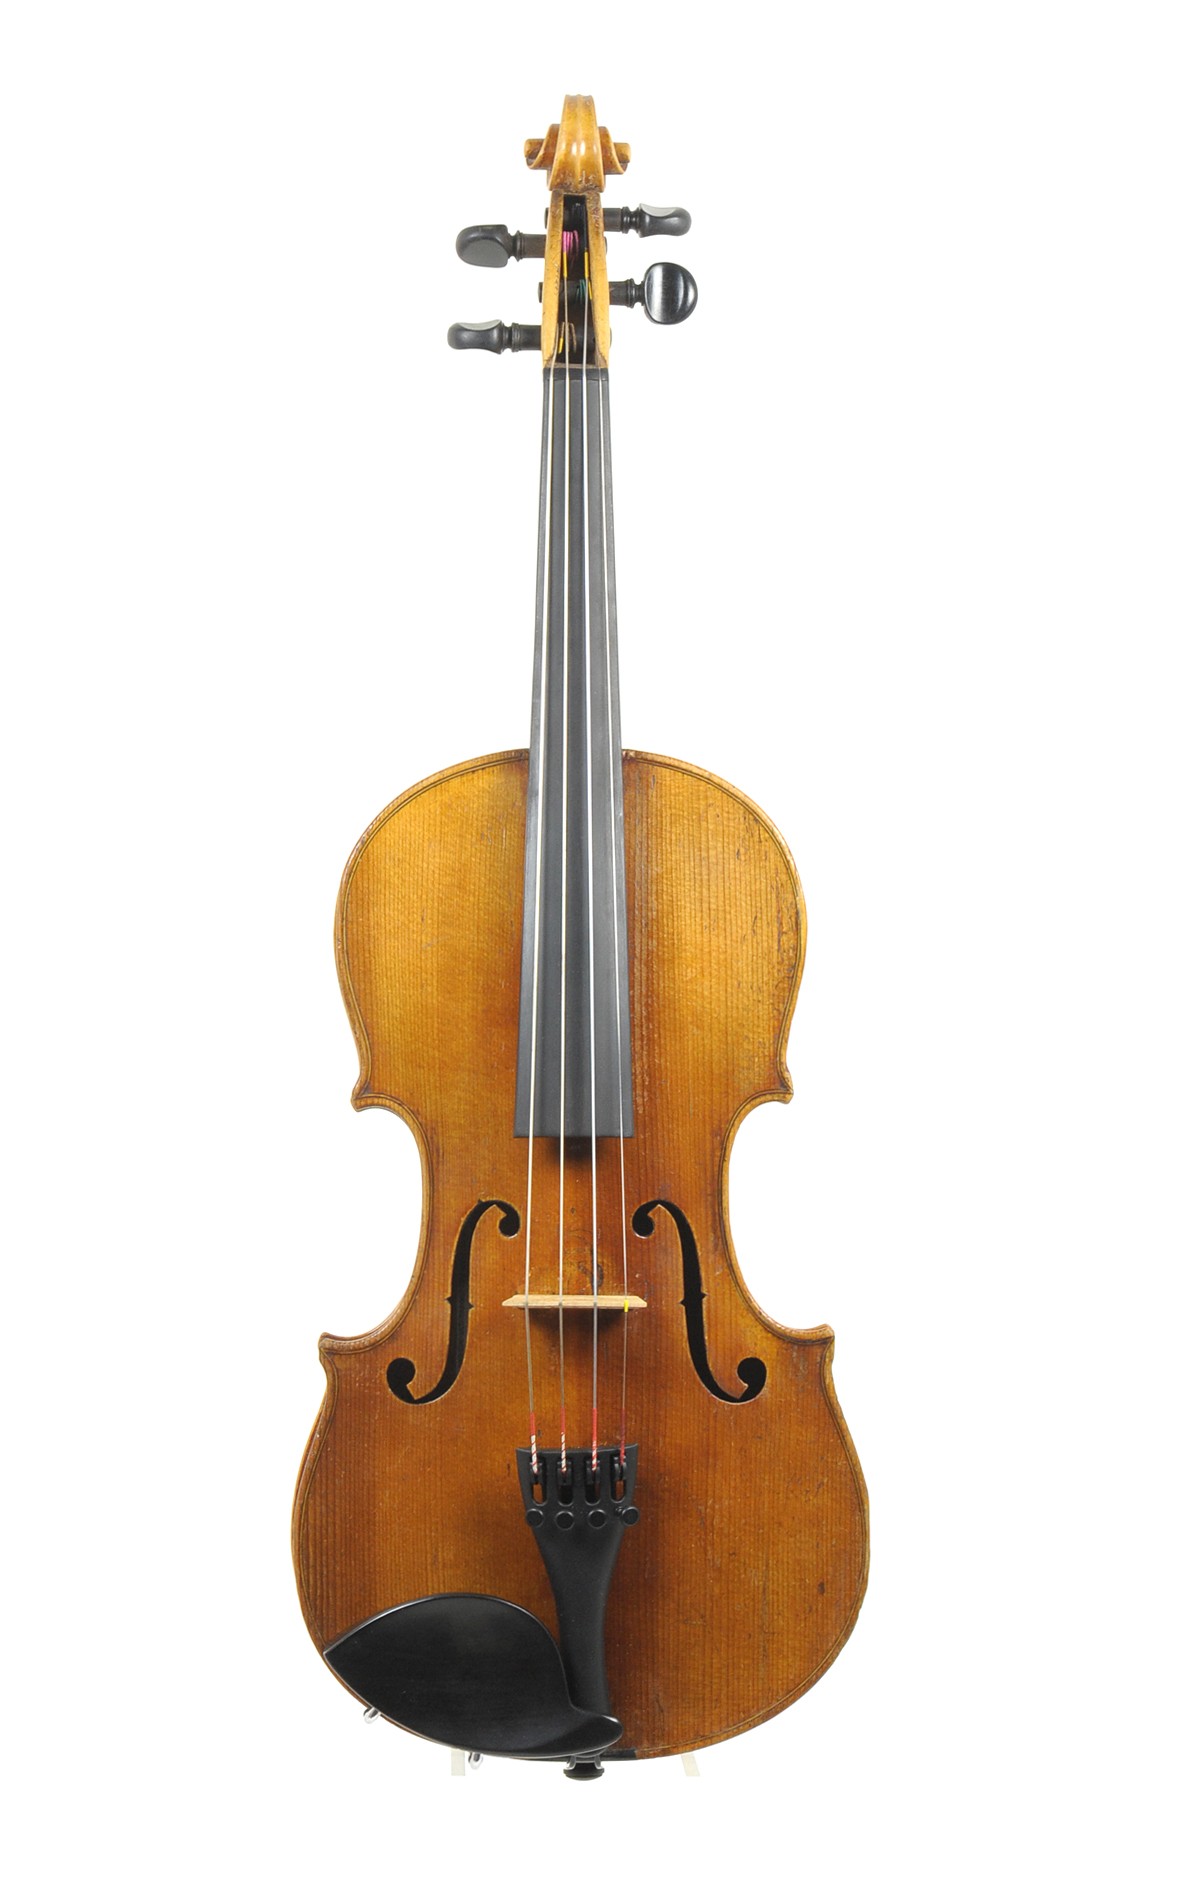 3/4 Markneukirchen violin approx. 1900 - top